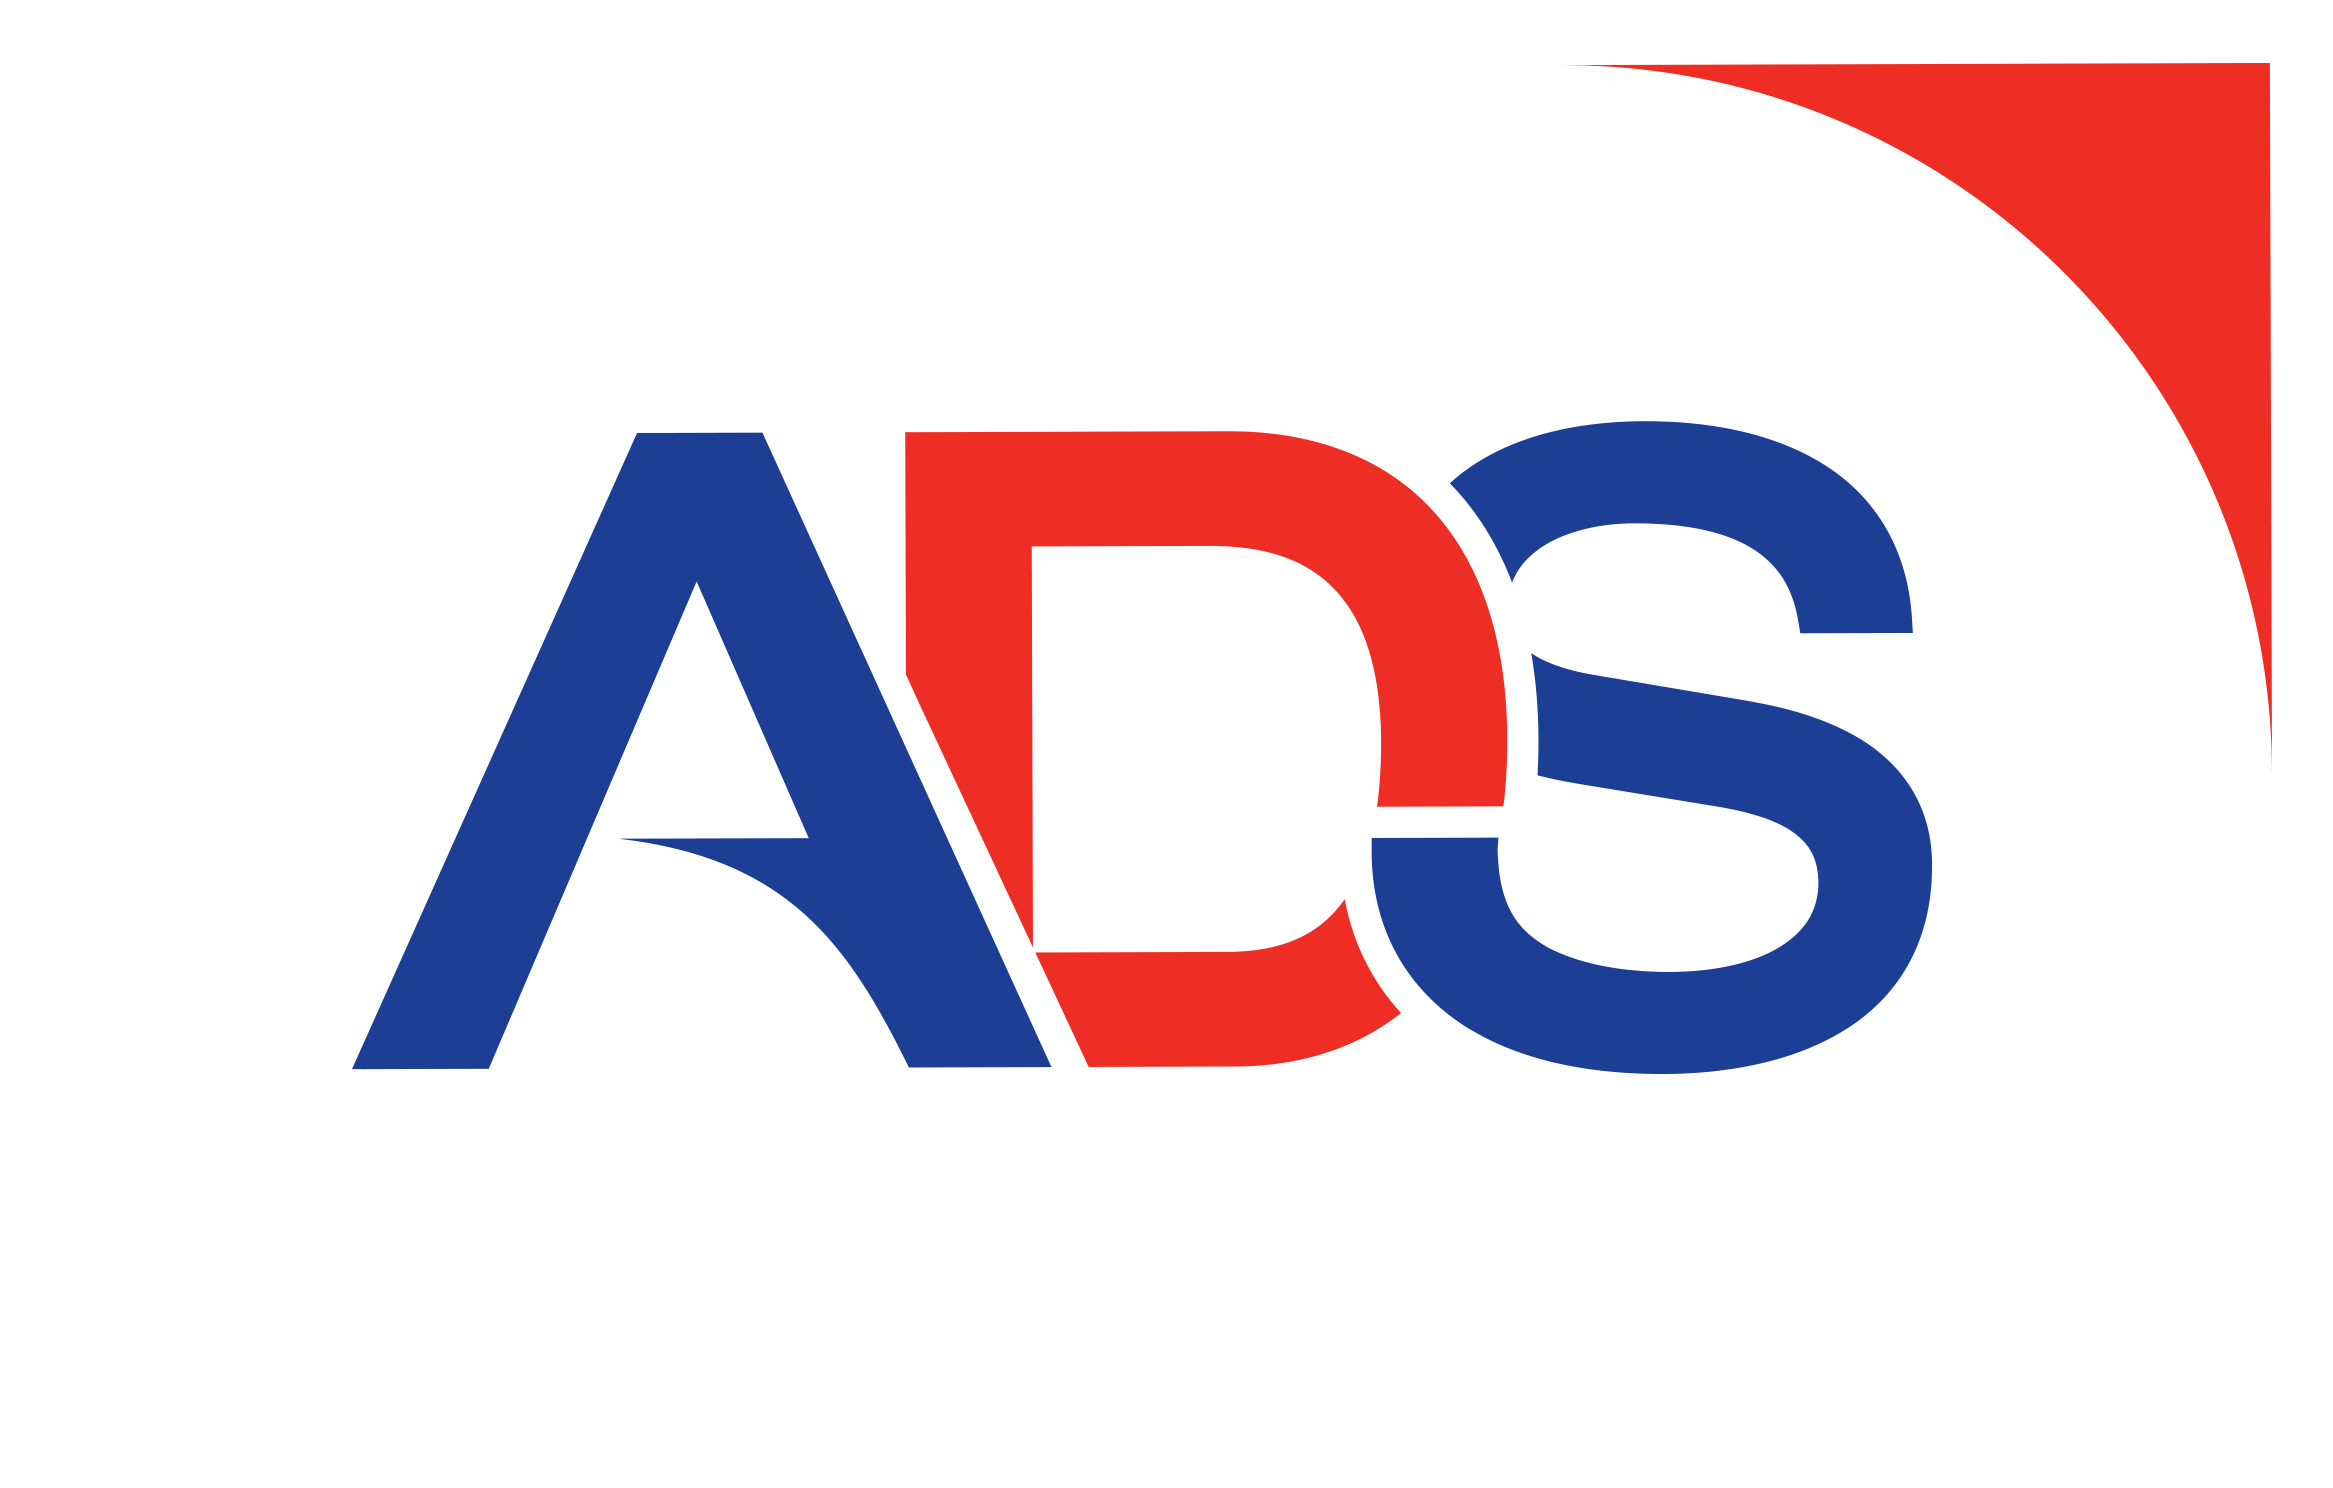 ADS Group